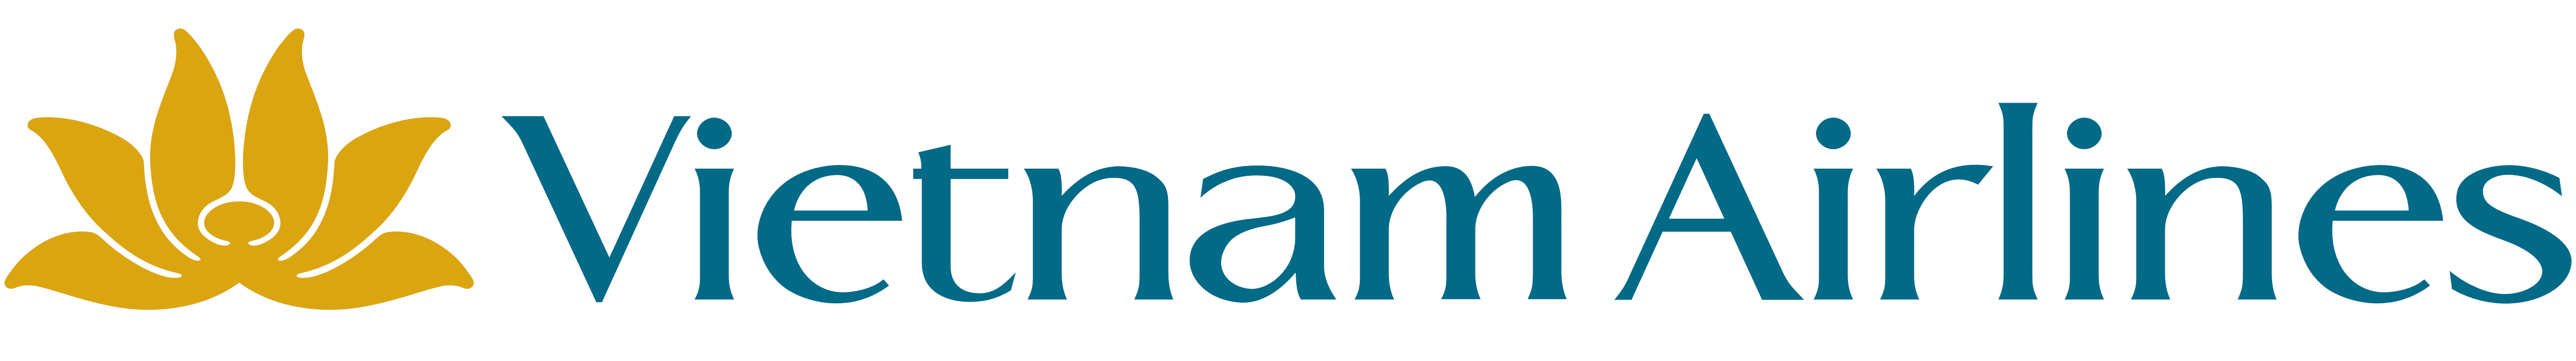 Vietnam Airlines logo, logotype